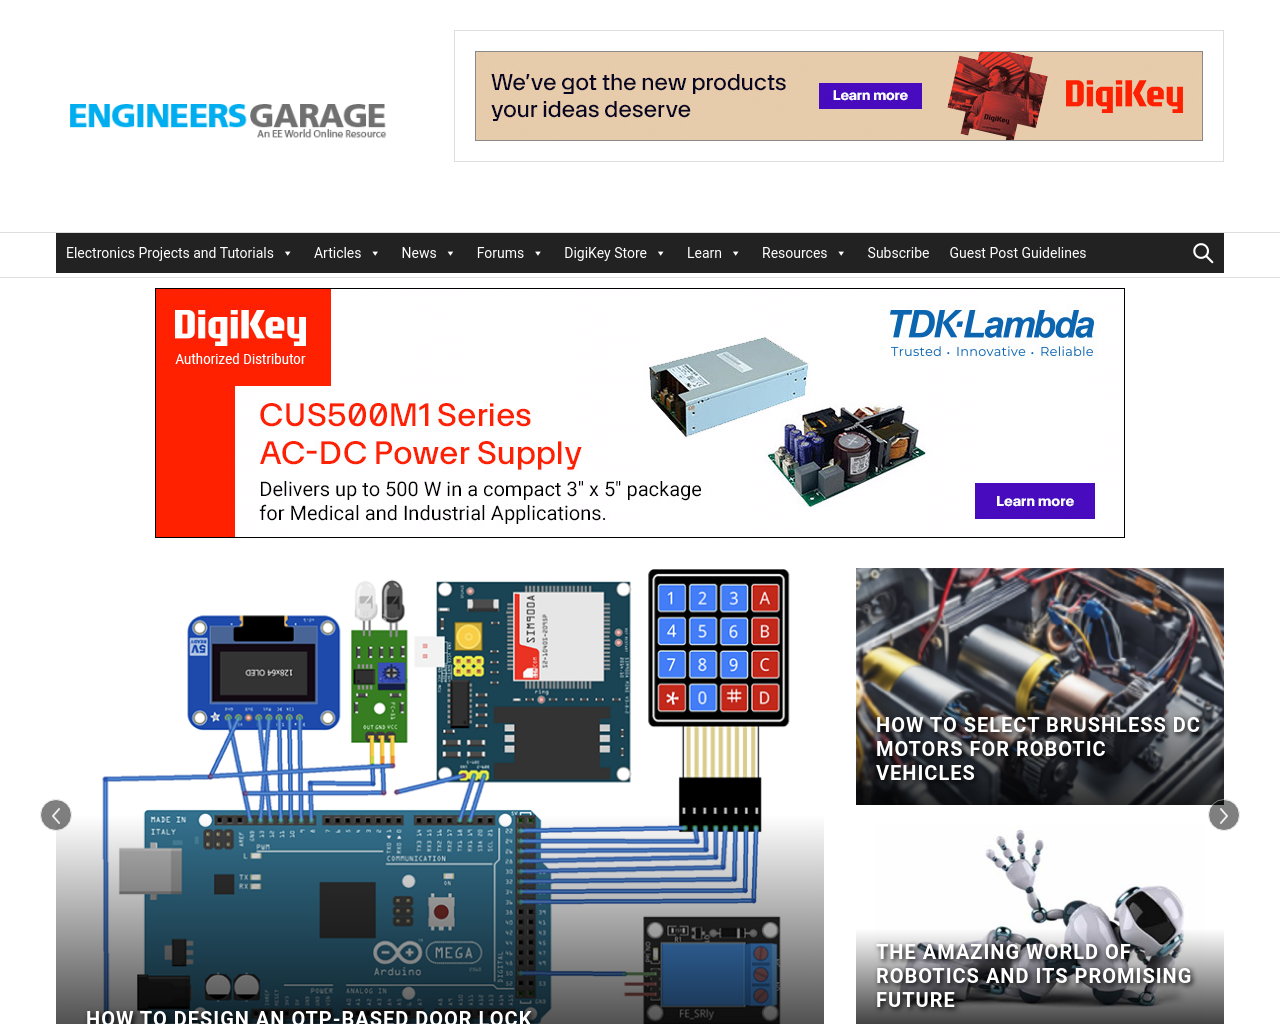 engineersgarage.com